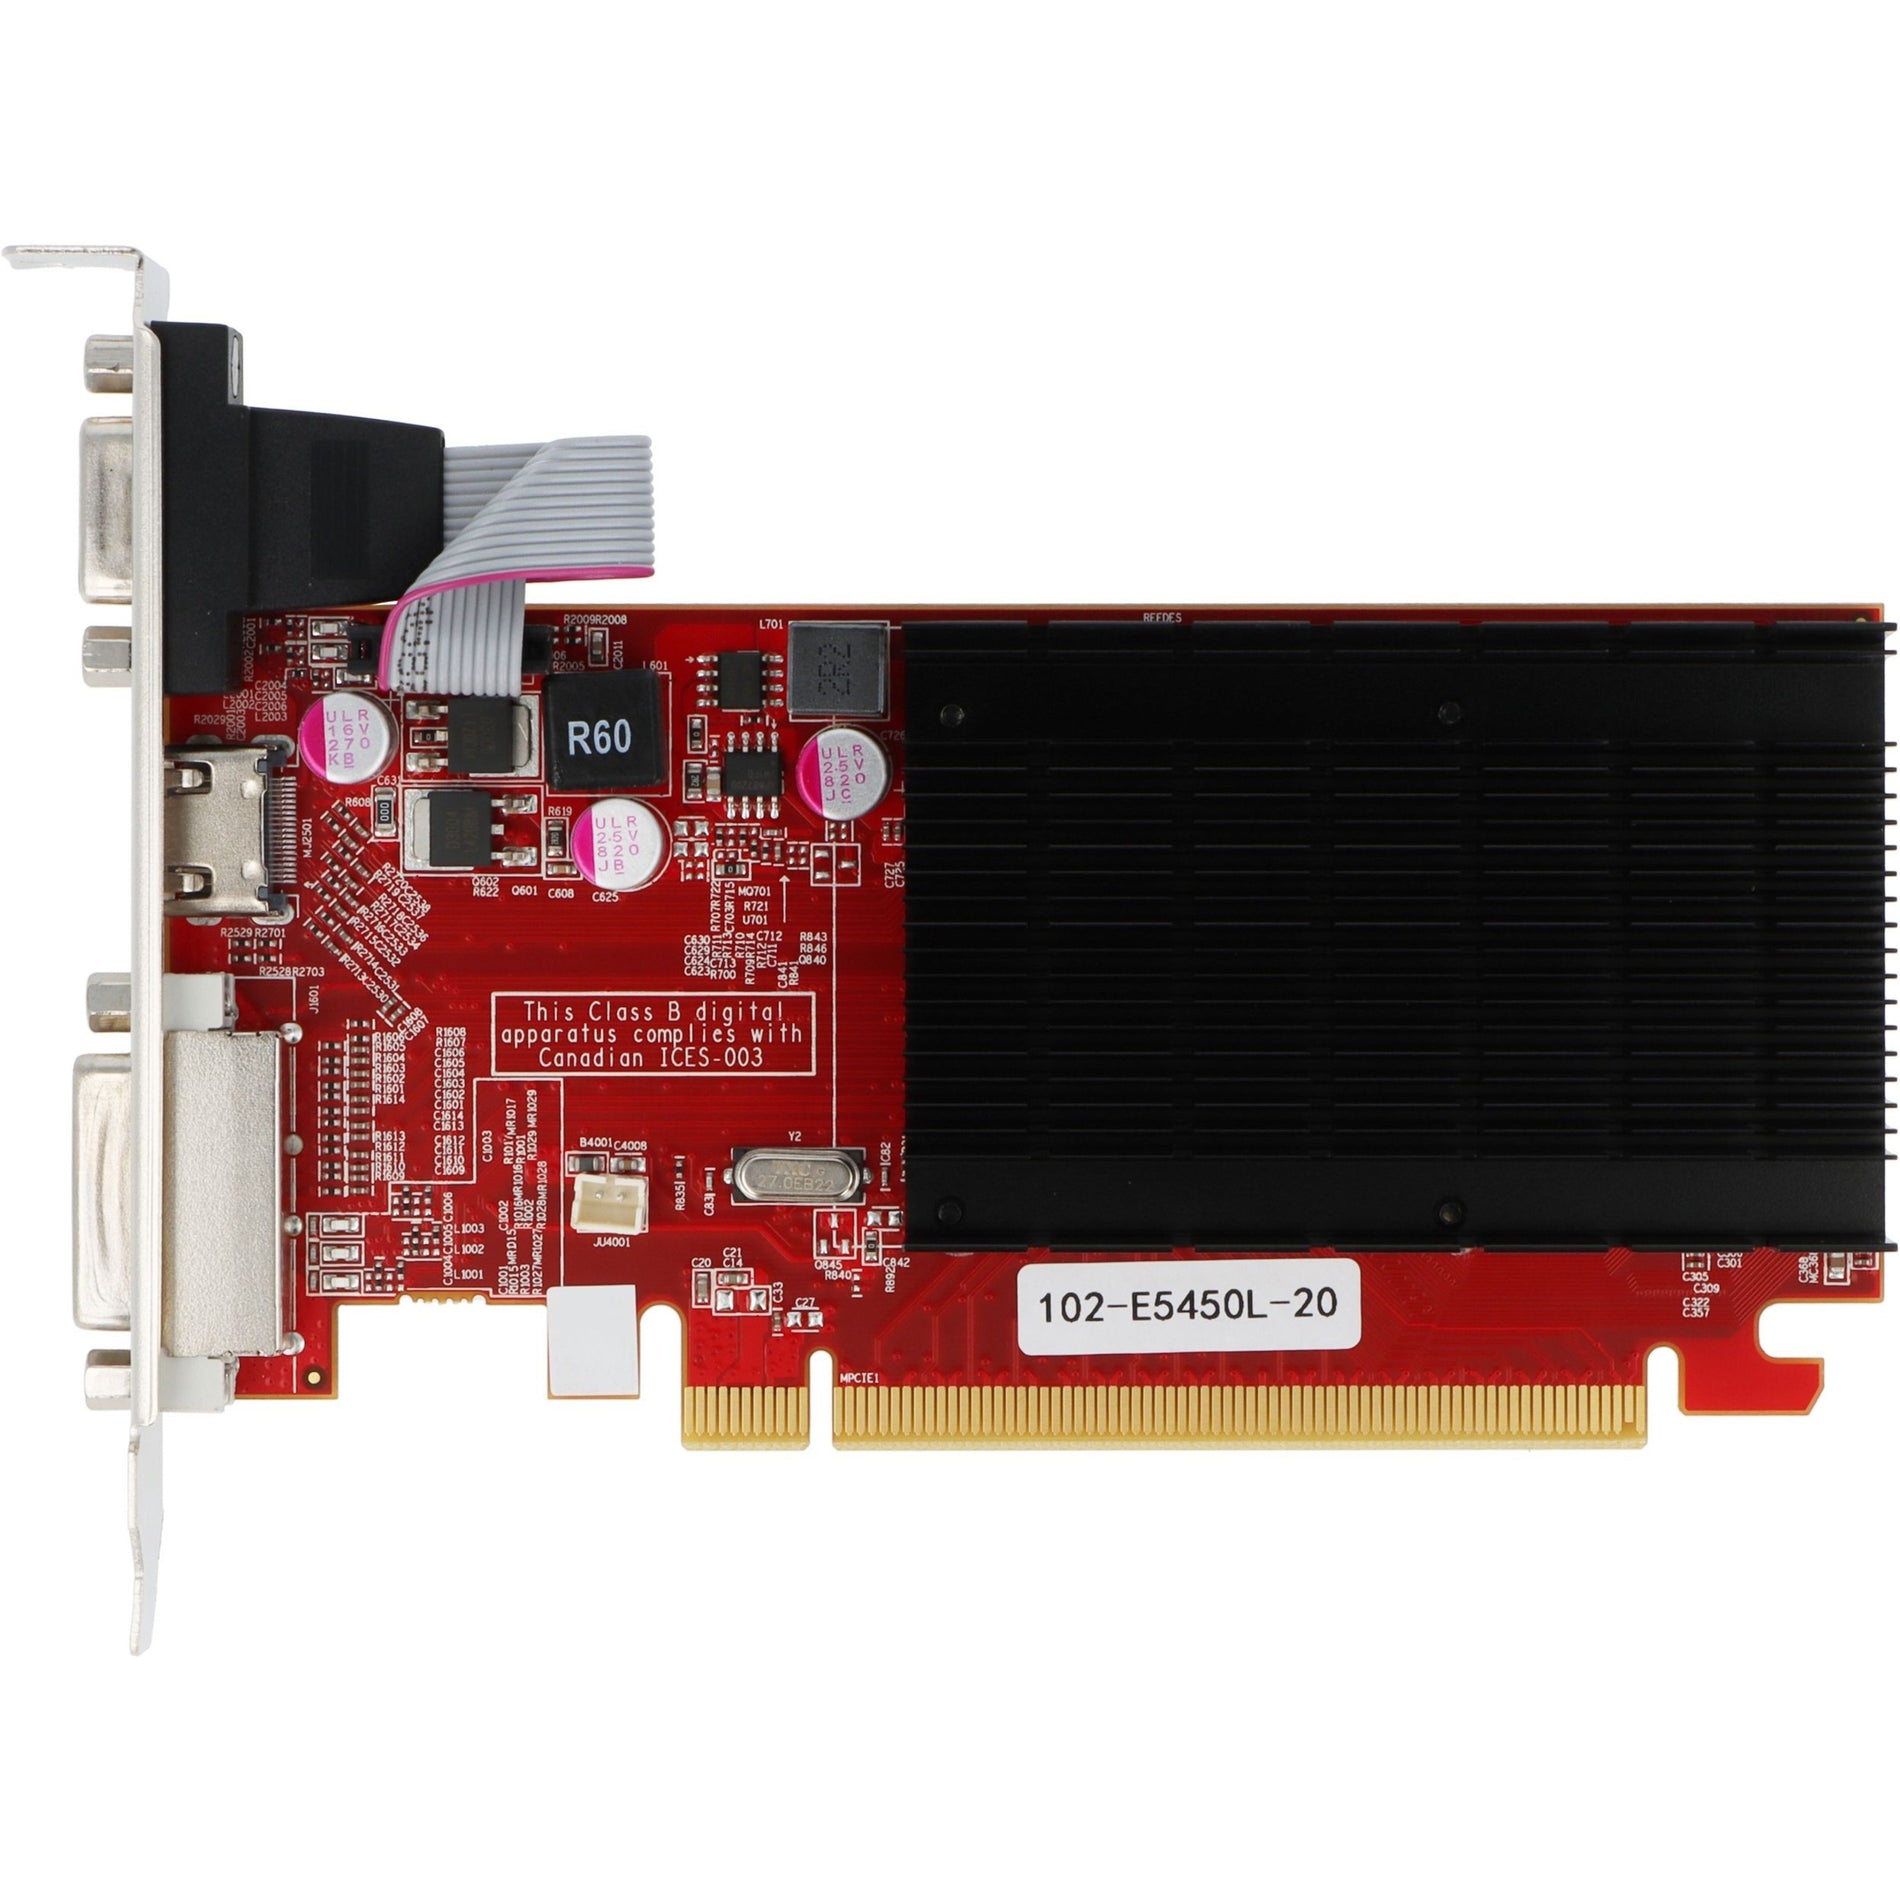 VisionTek 900356 Radeon HD 5450 Graphics Card, 2GB DDR3 SDRAM, DirectX 11.0, HDMI, VGA, DVI